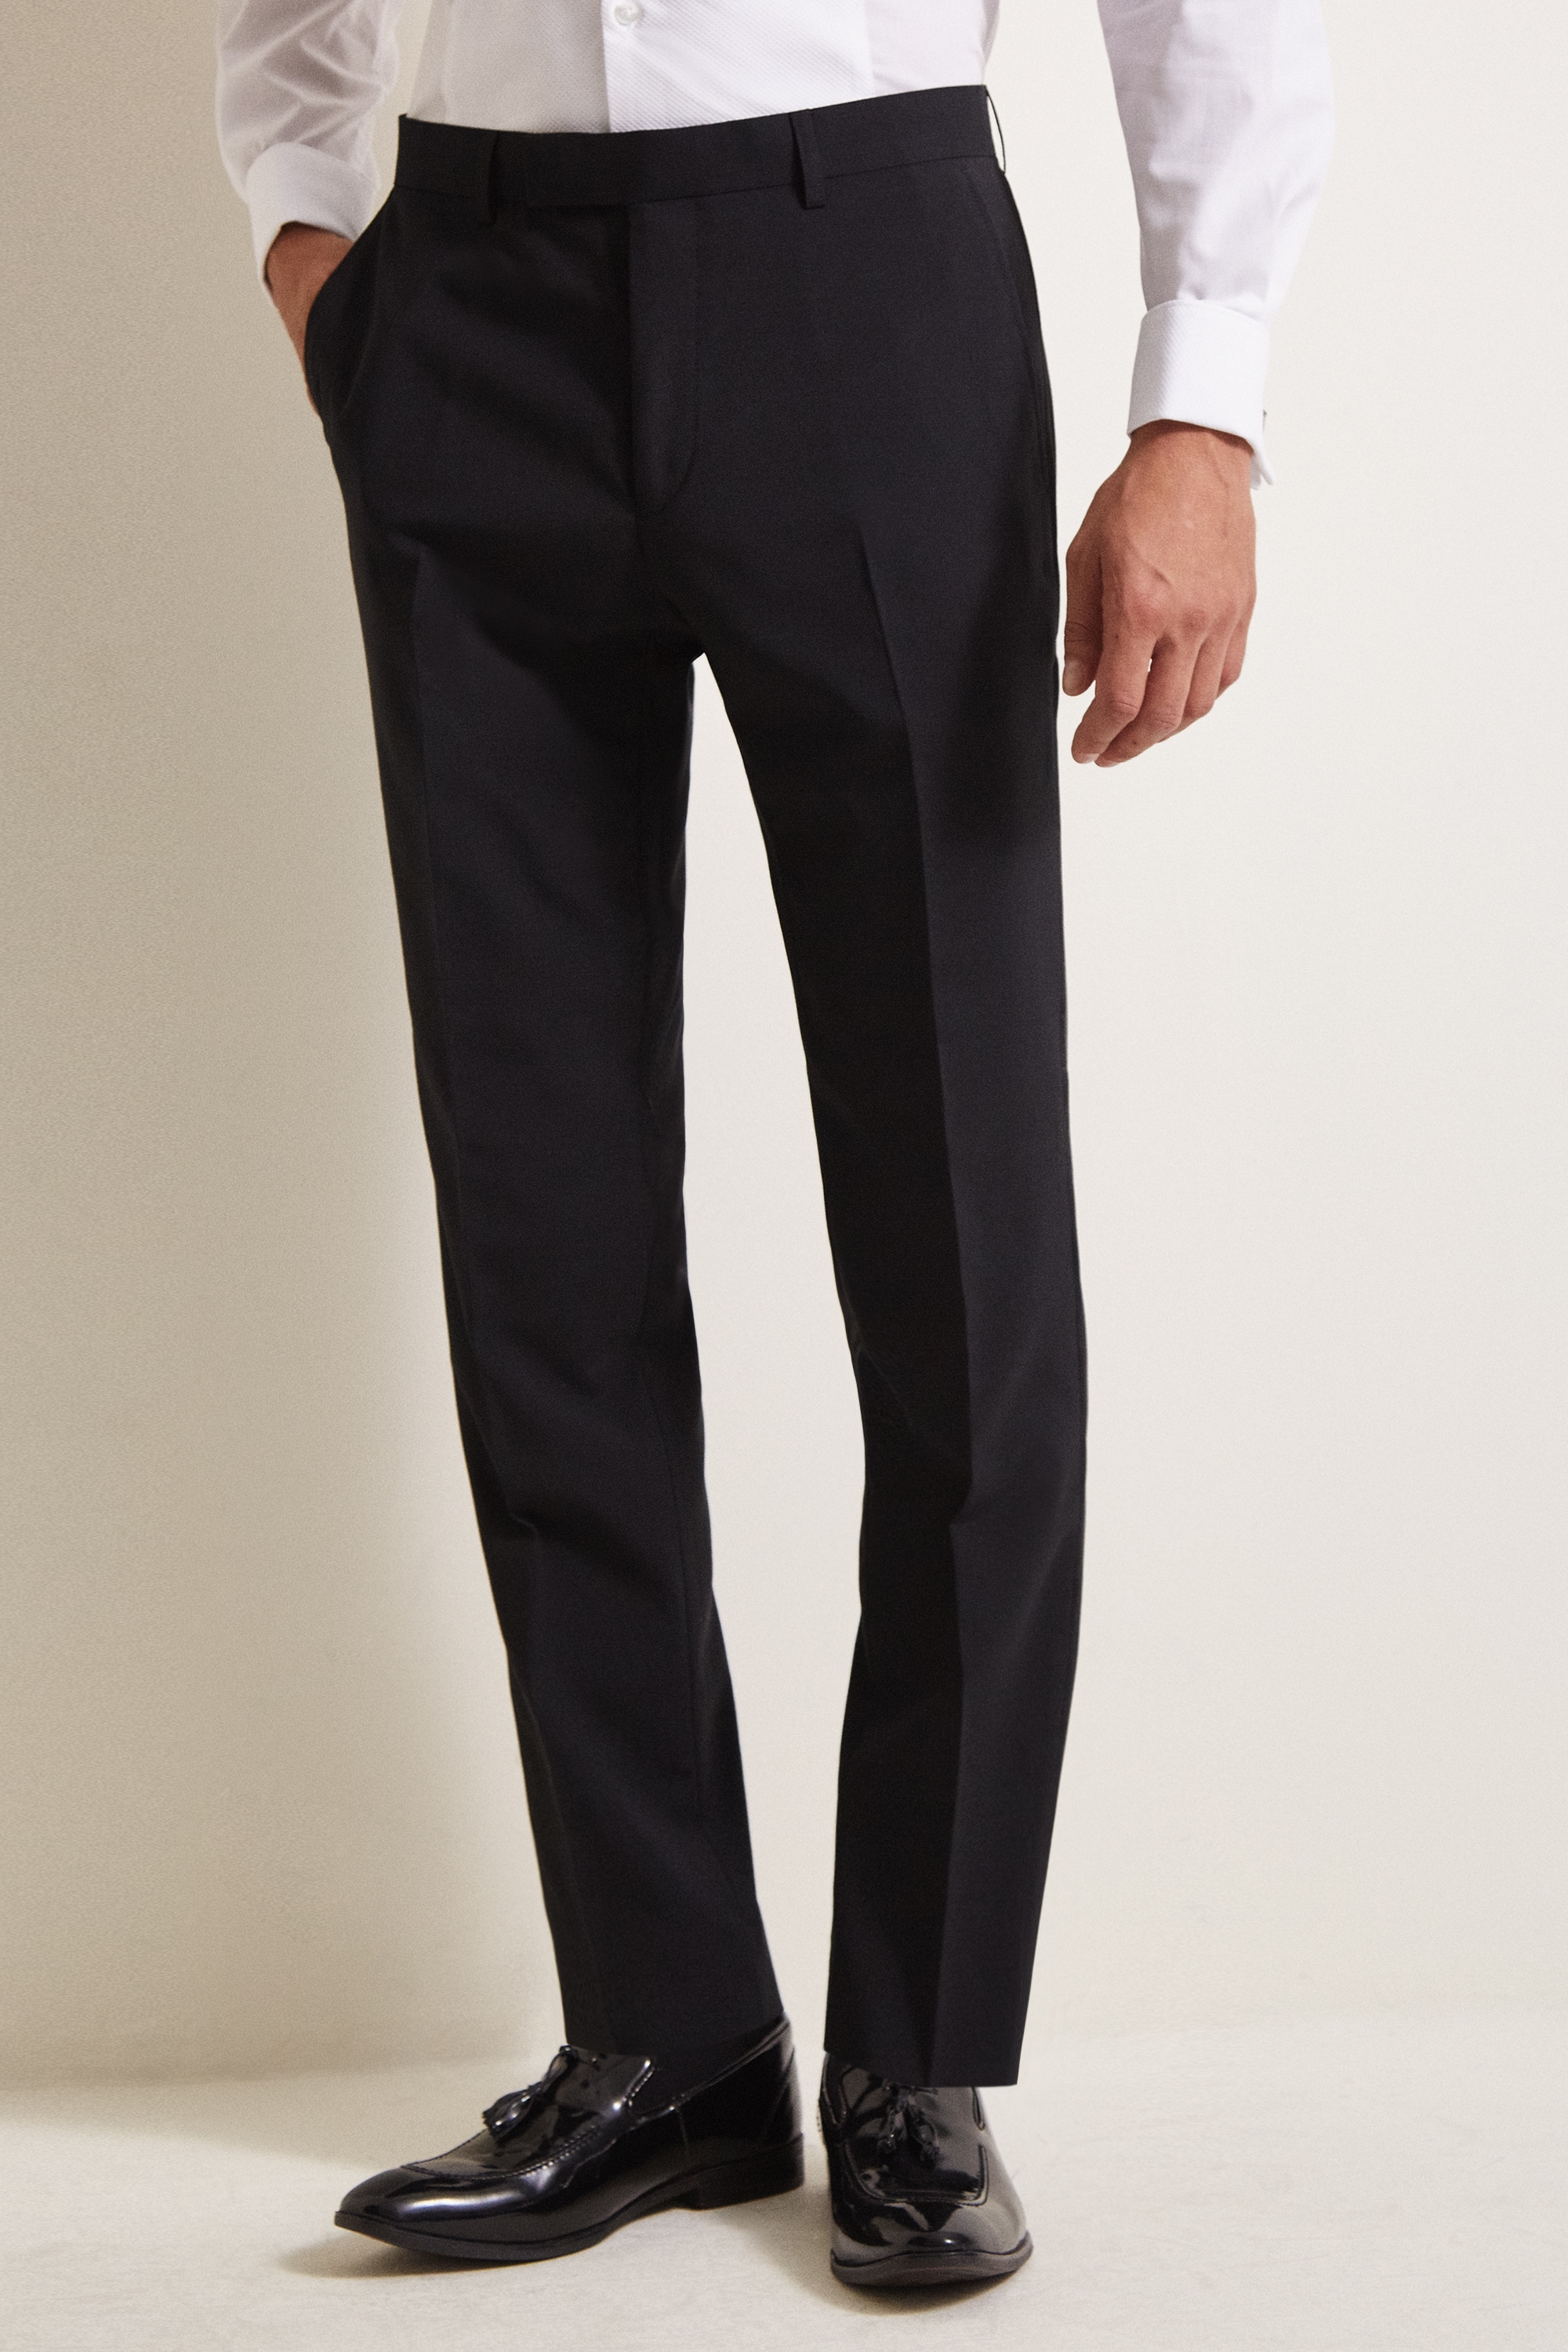 PINETS  BLACK  Slim Fit Suits  Ted Baker UK